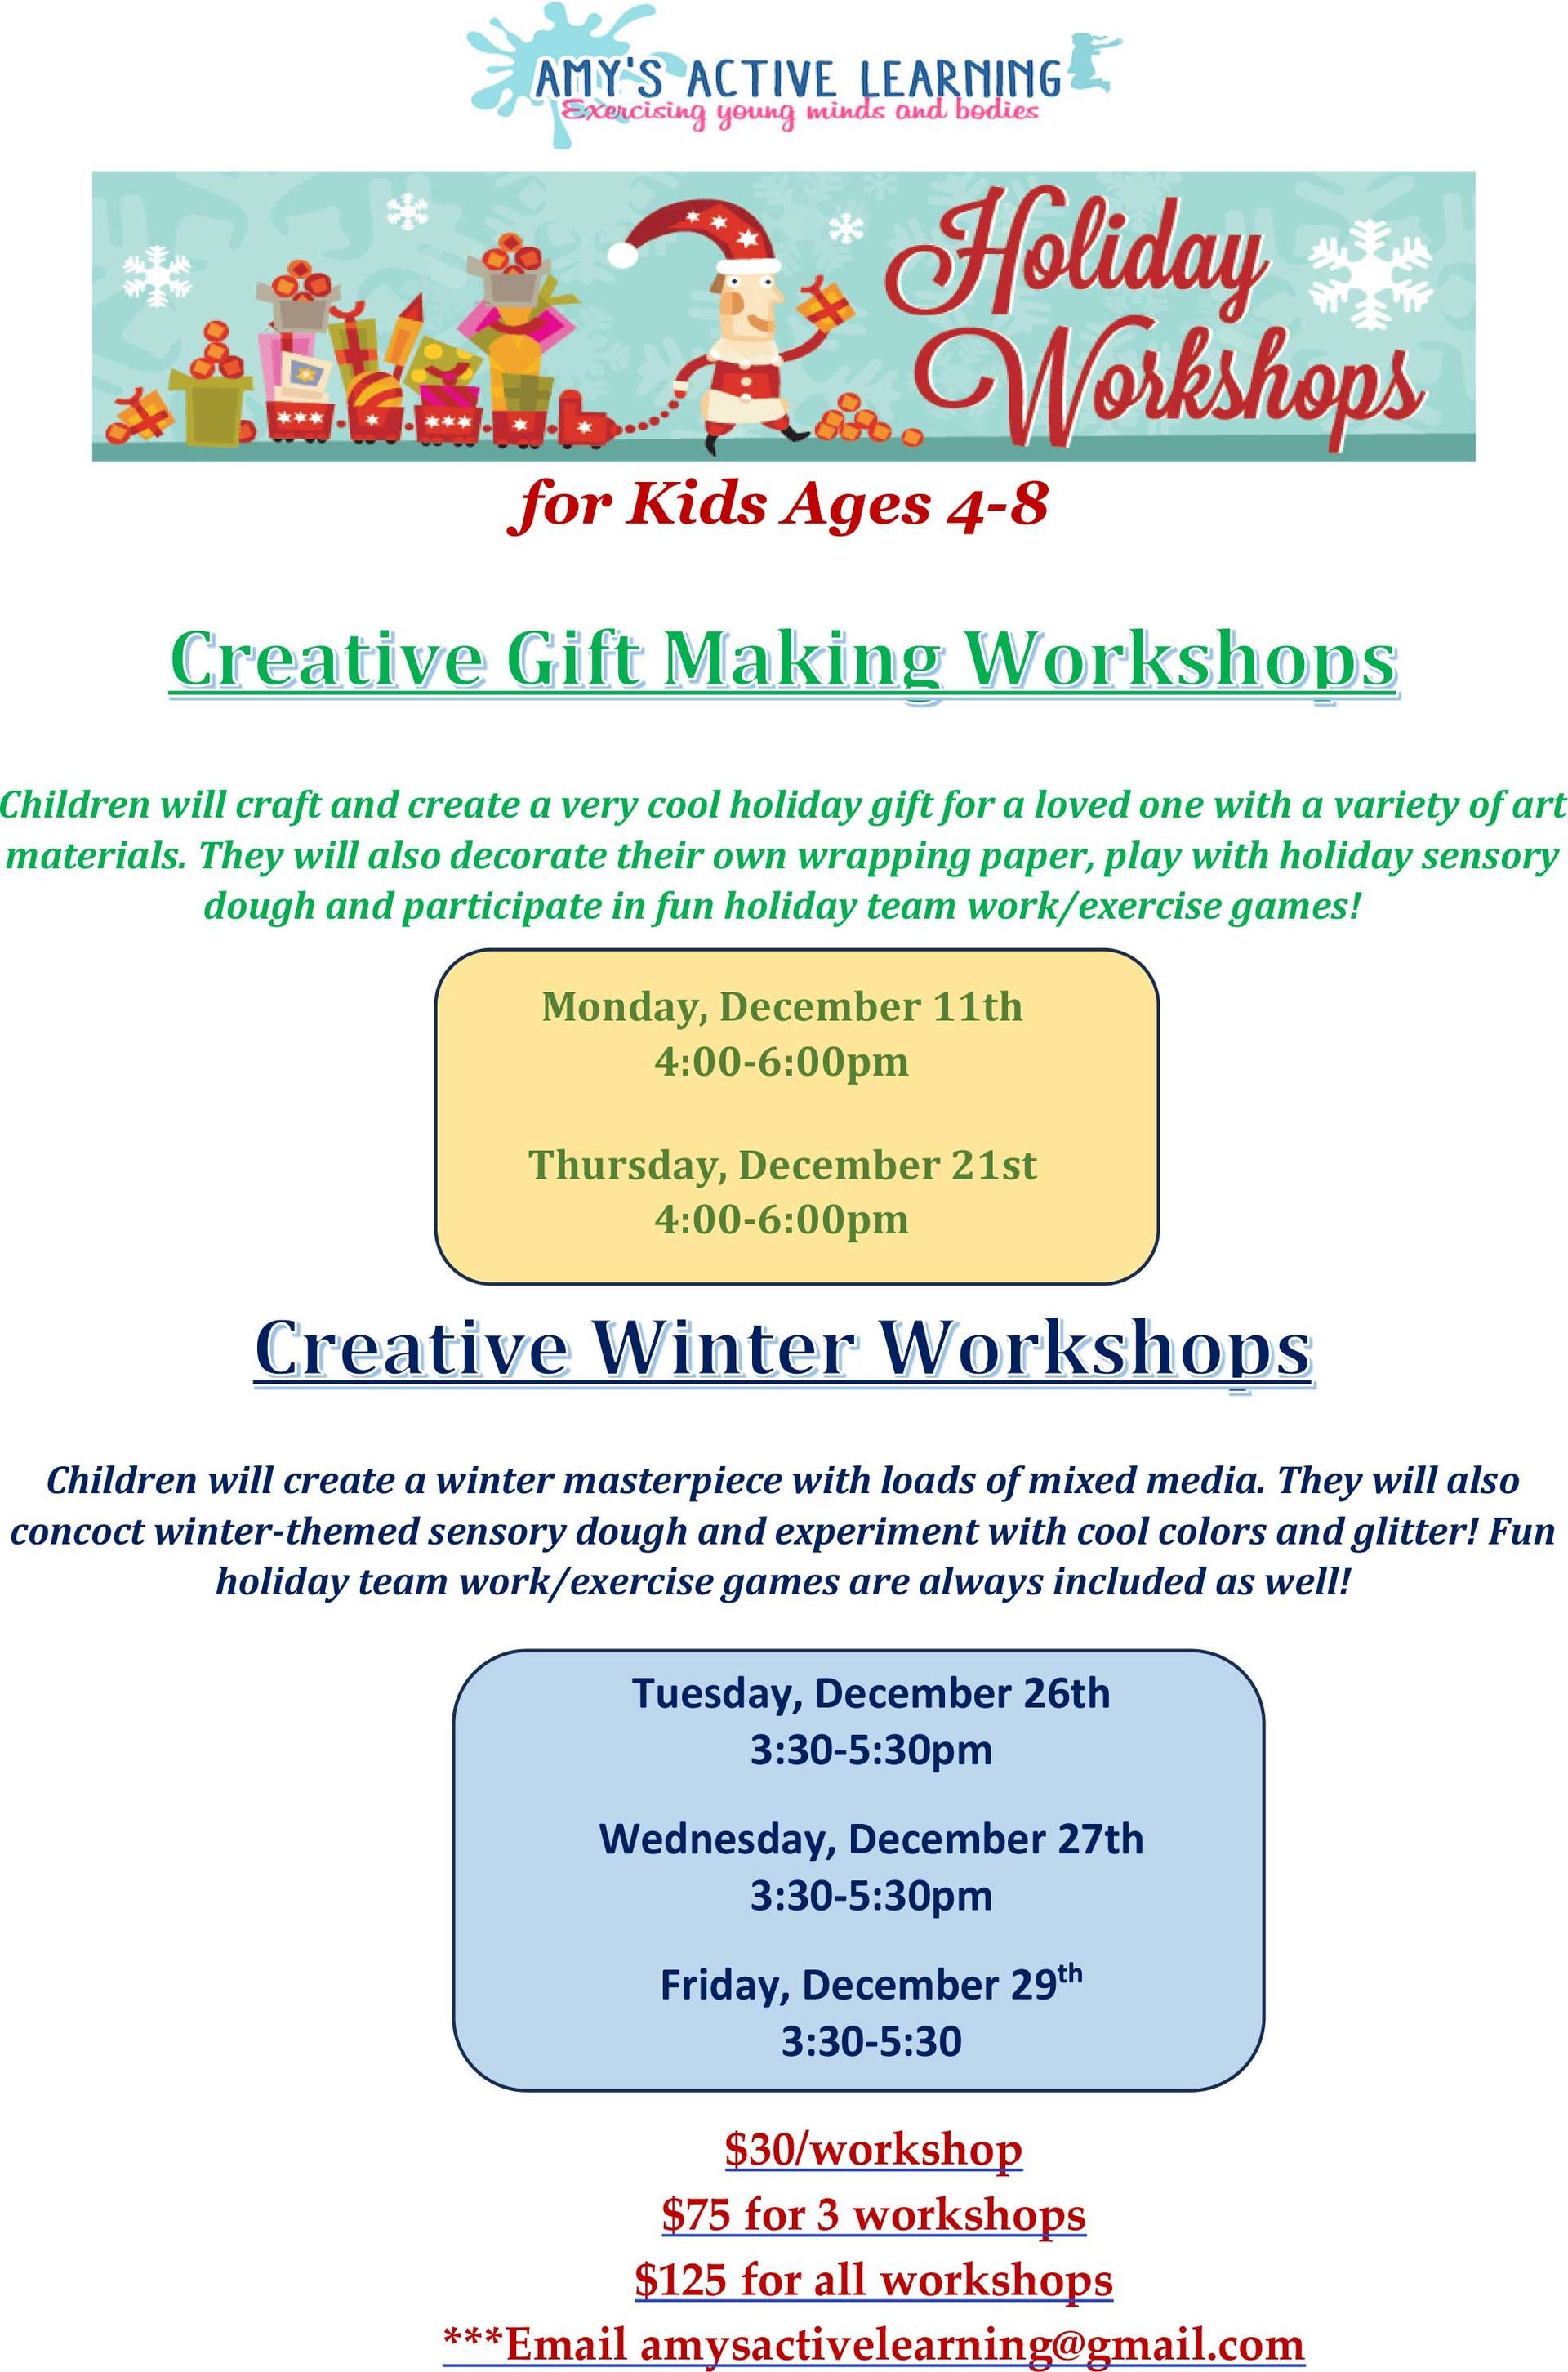 Holiday workshops for kids ages 4-8